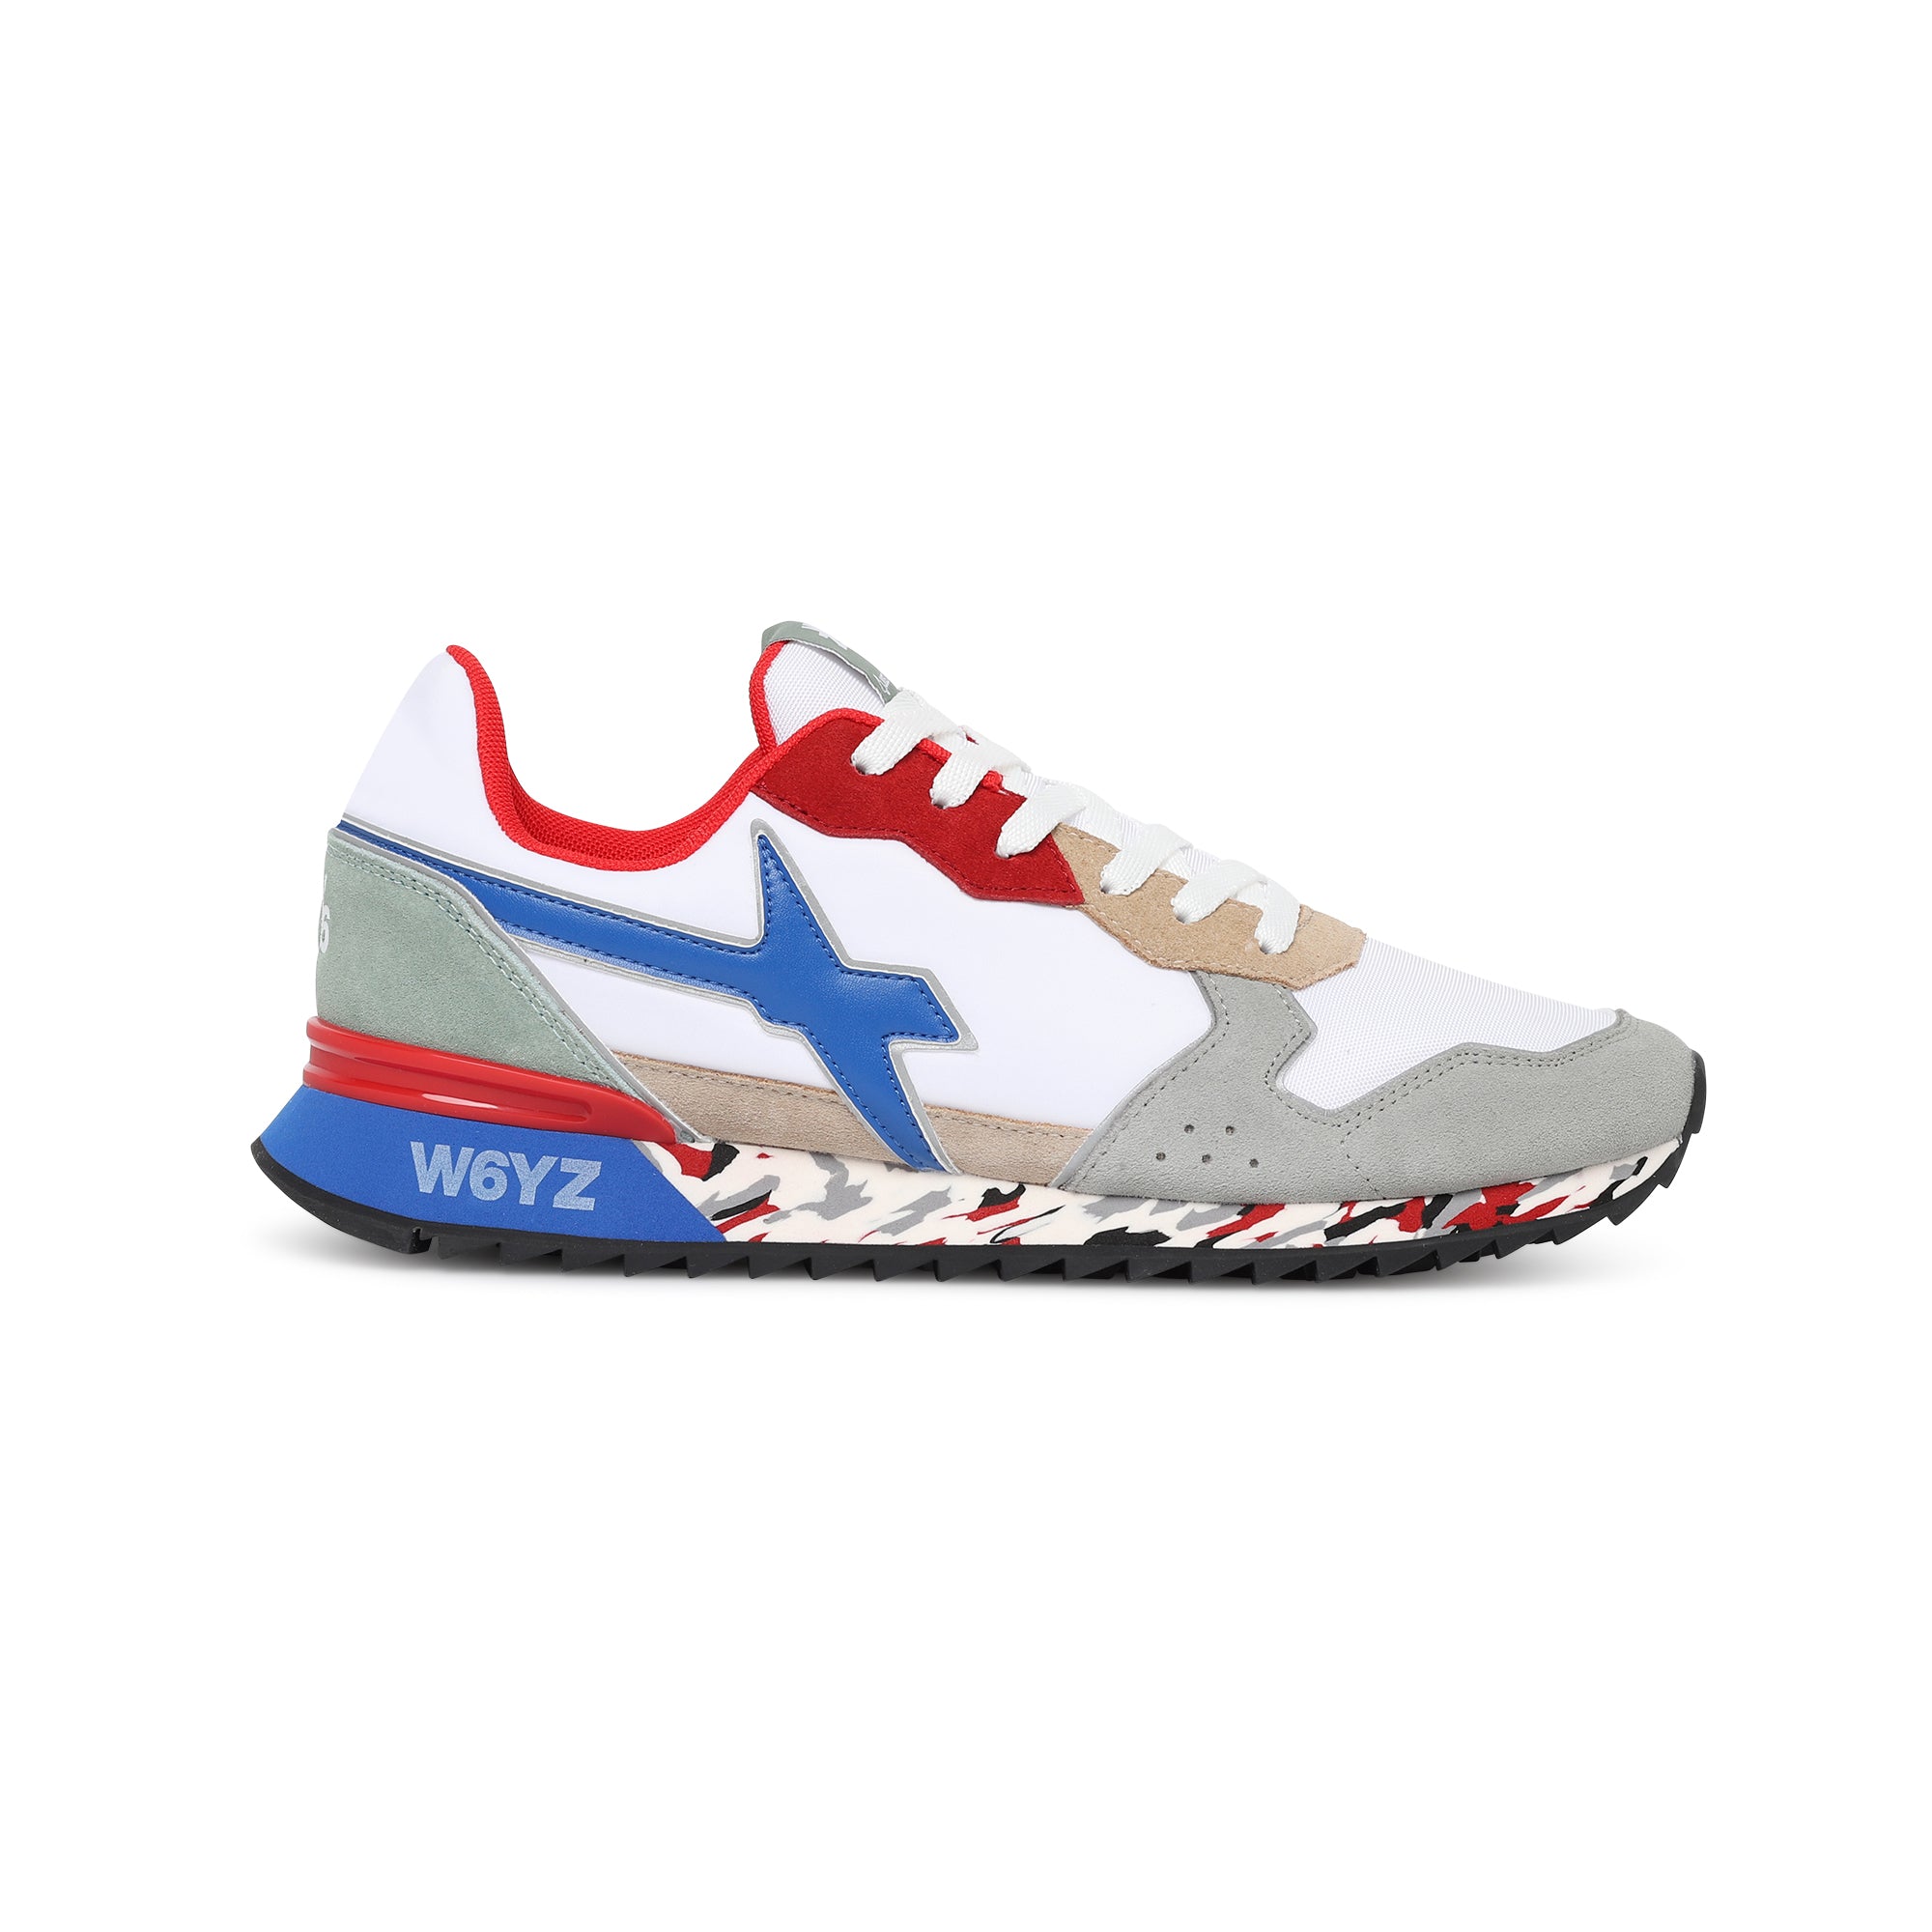 Sneaker w6yz  grey-white-azure-red uomo  - 1